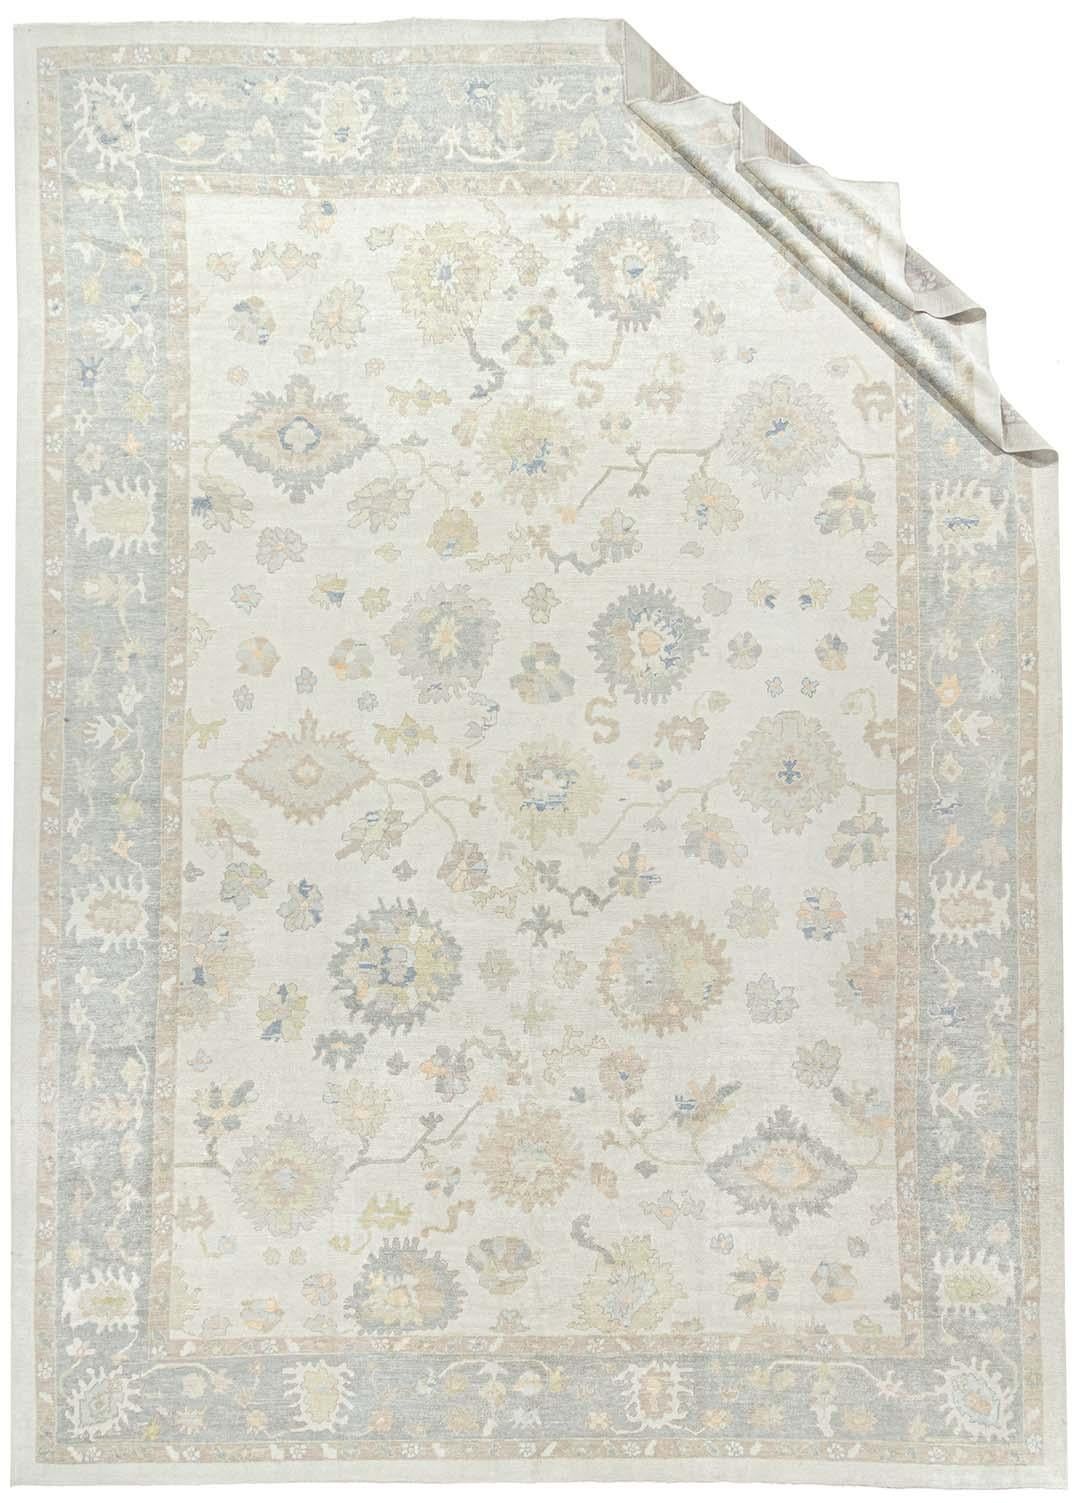 Turkish Oversize Oushak Style Handwoven Carpet Rug  14'4 x 20'8 For Sale